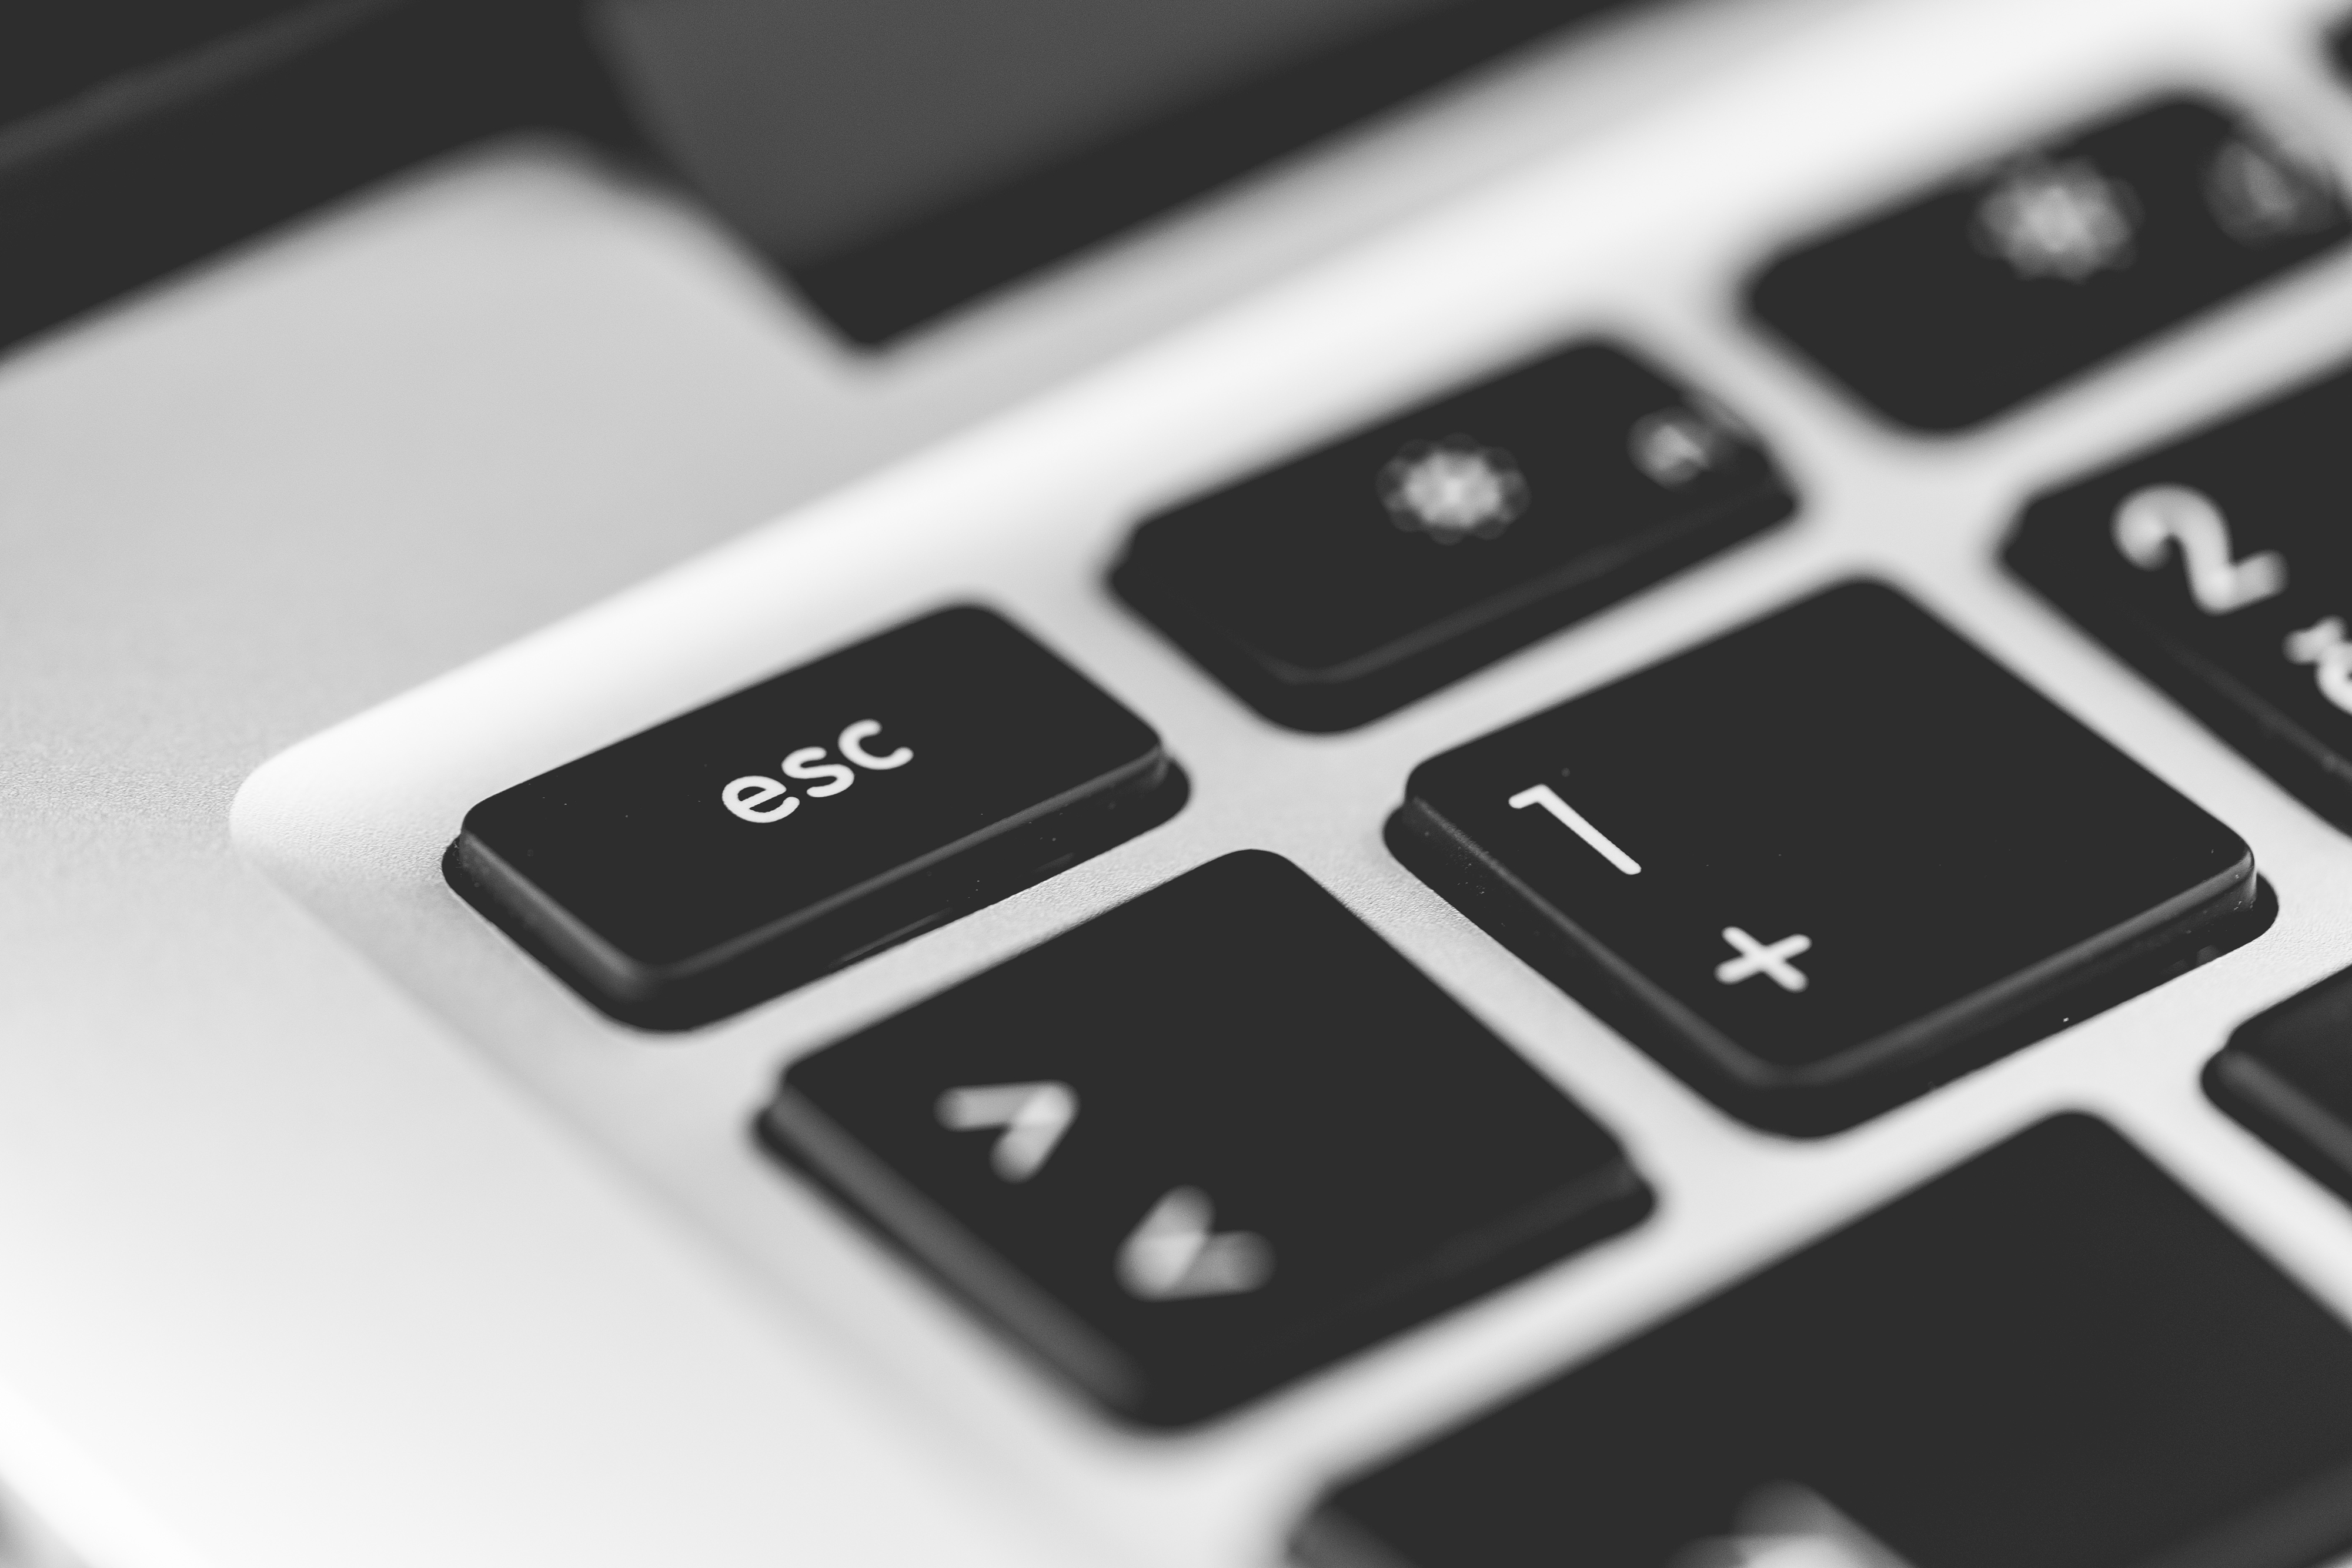 escape-key-laptop-keyboard-close-up-picjumbo-com (1)